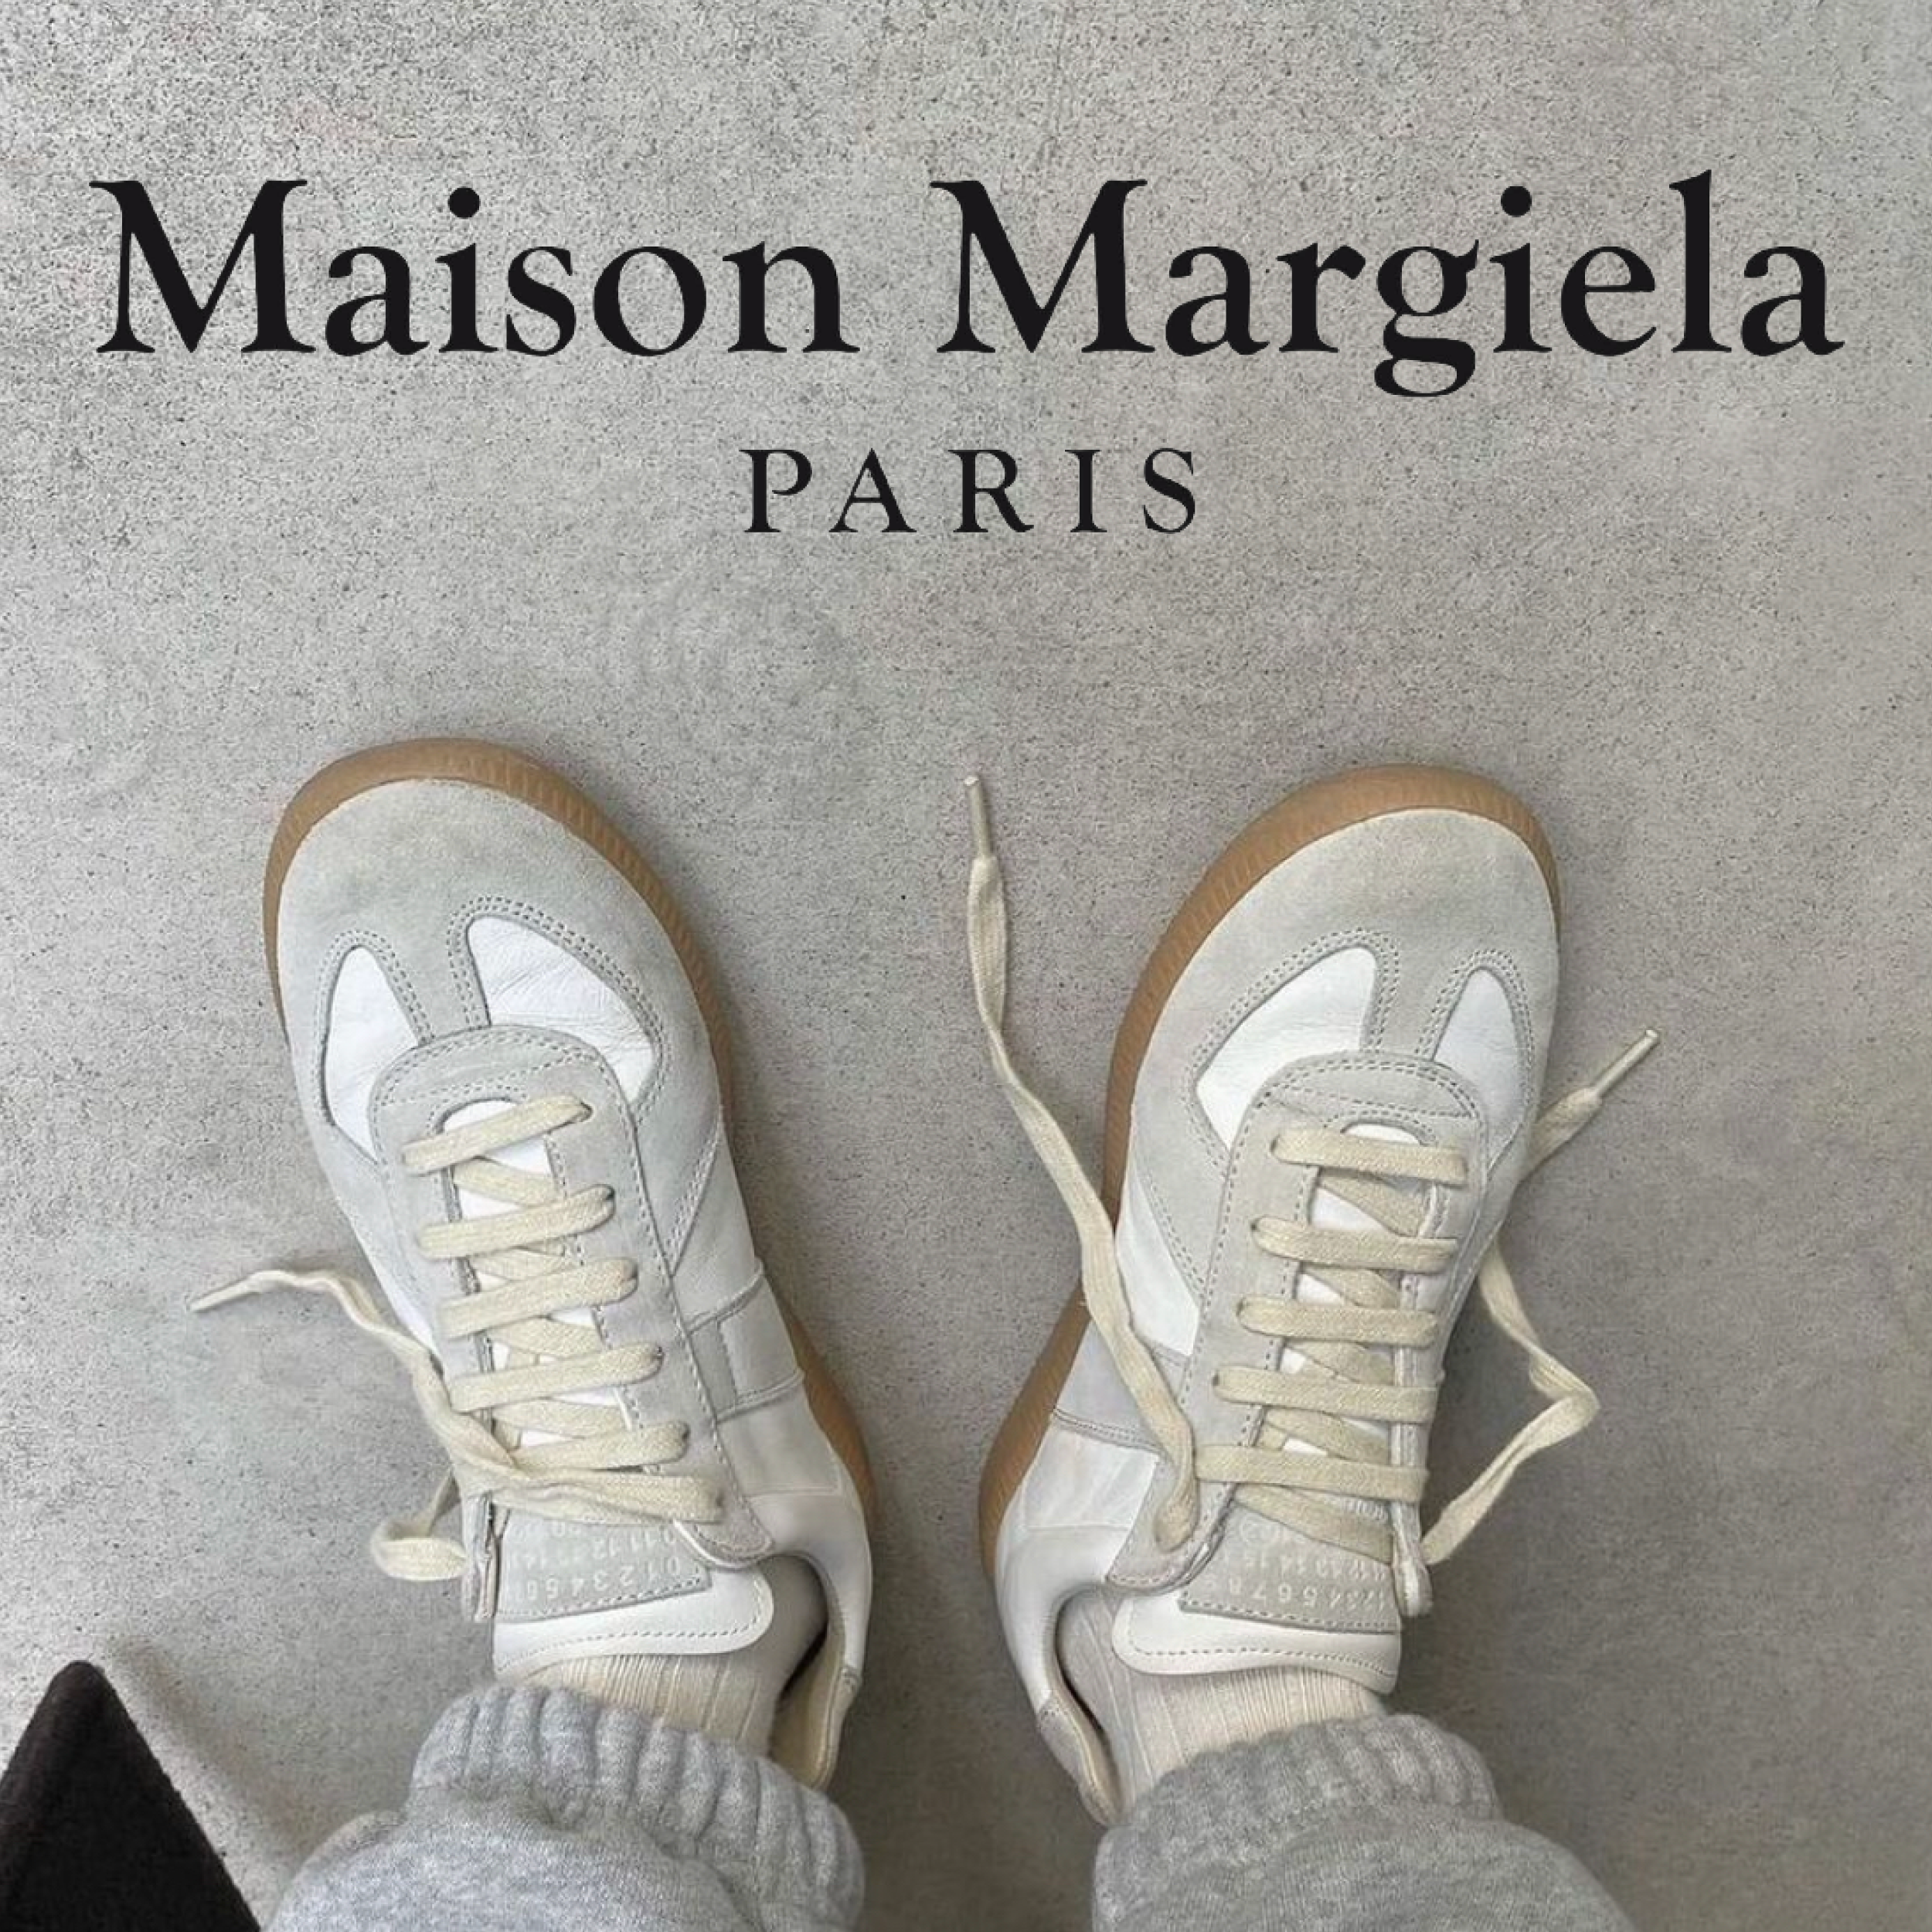 Maison Margiela – Trip Atomic